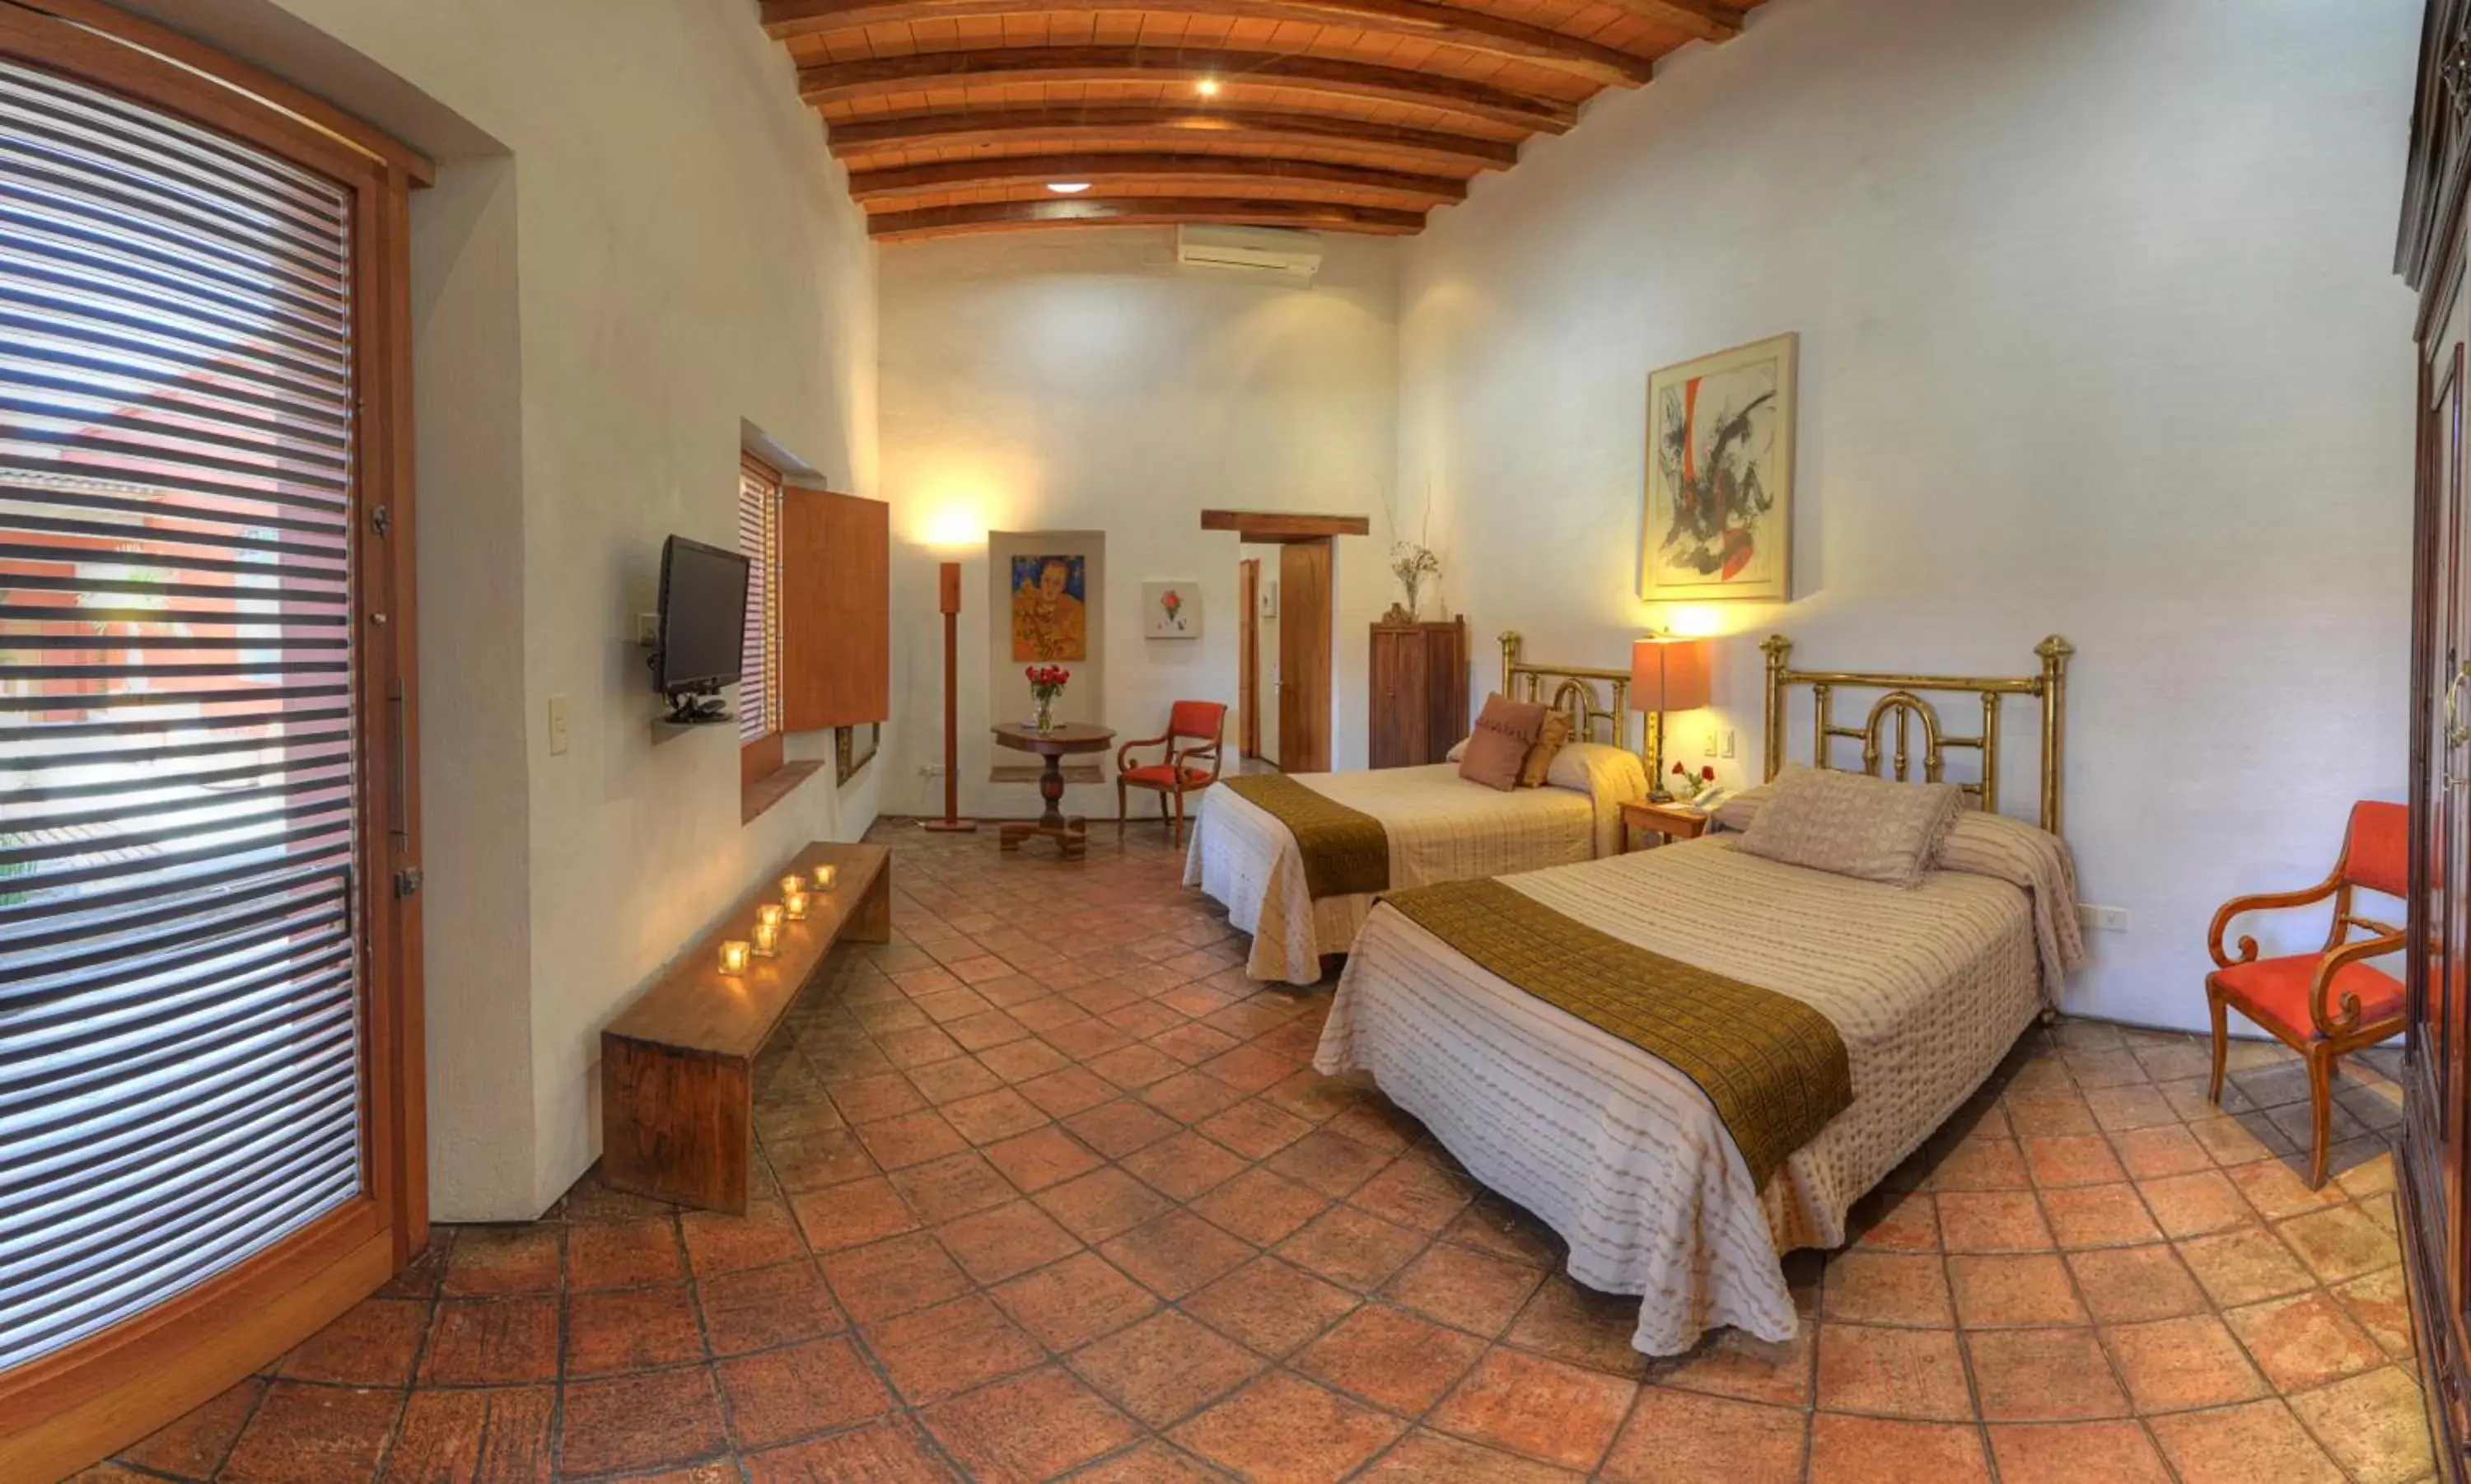 Deluxe Double Room with Two Double Beds in Hotel La Casona de Tita